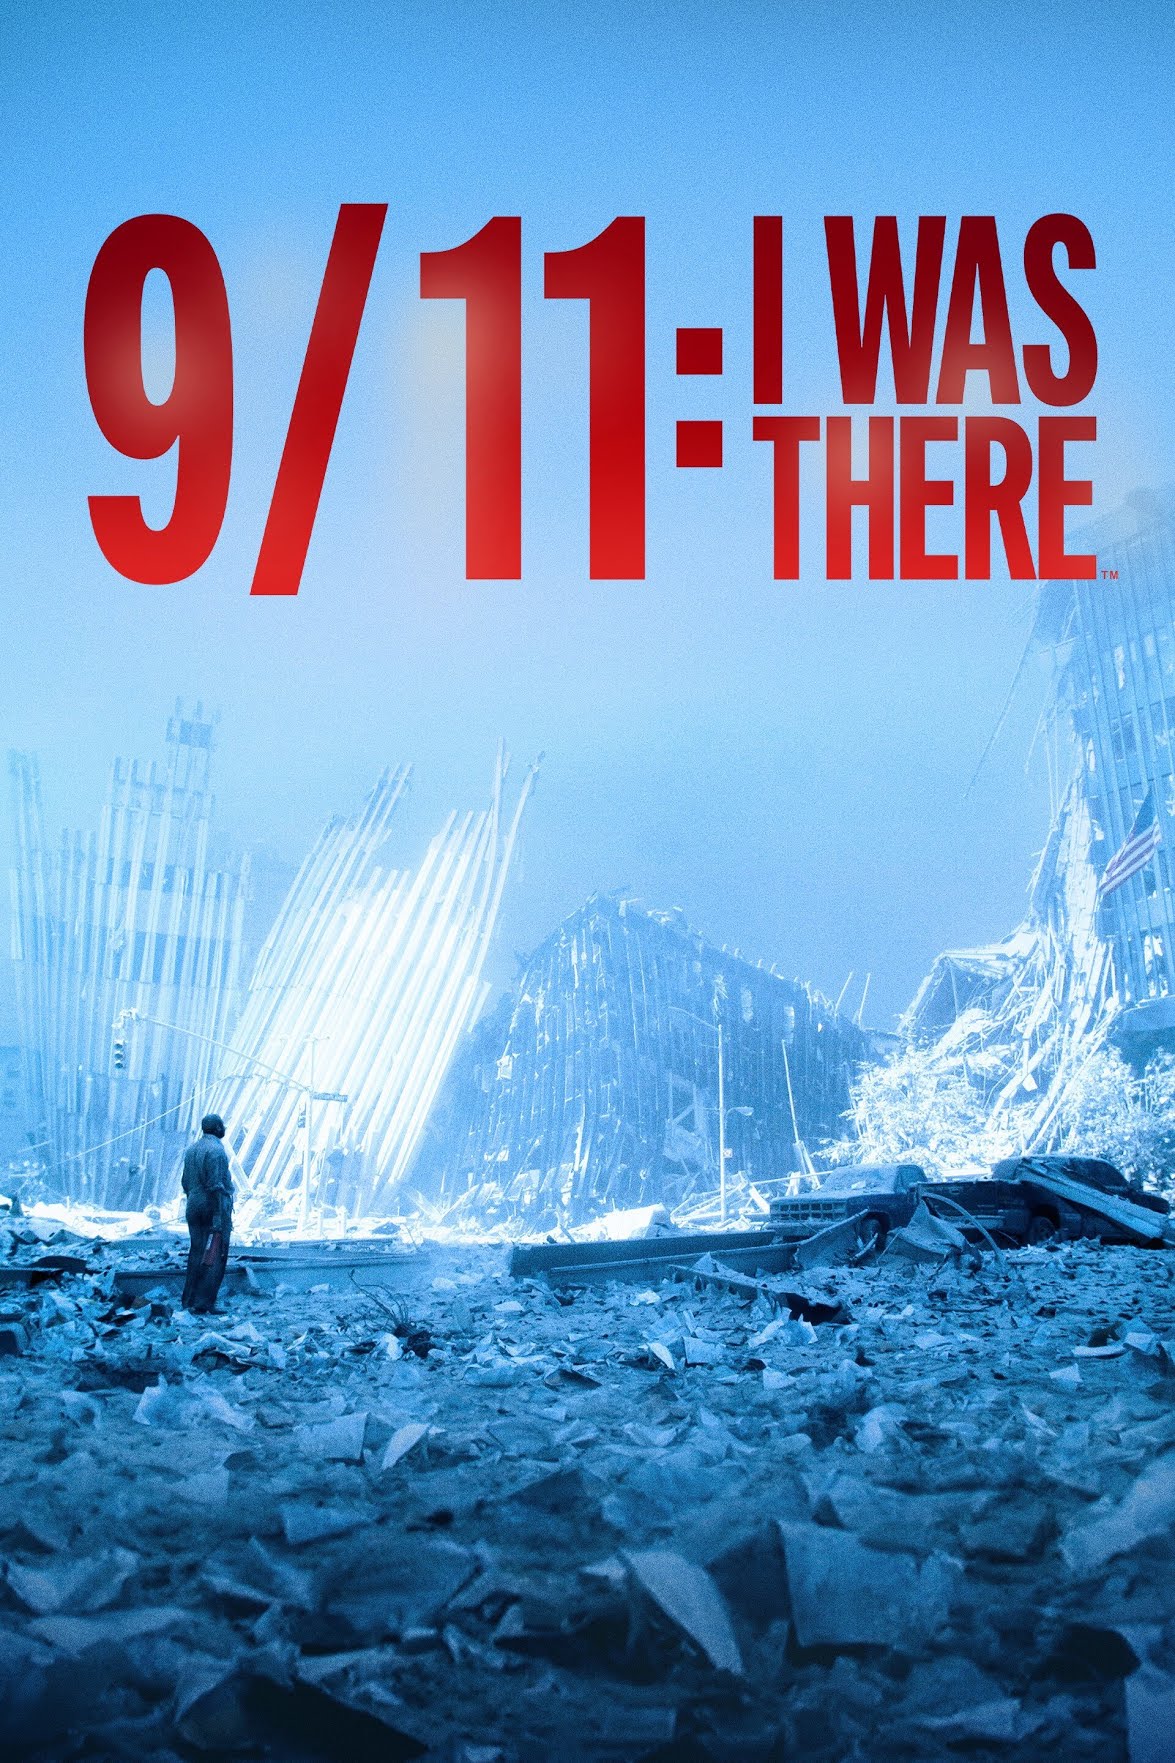 9/11: Four Flights